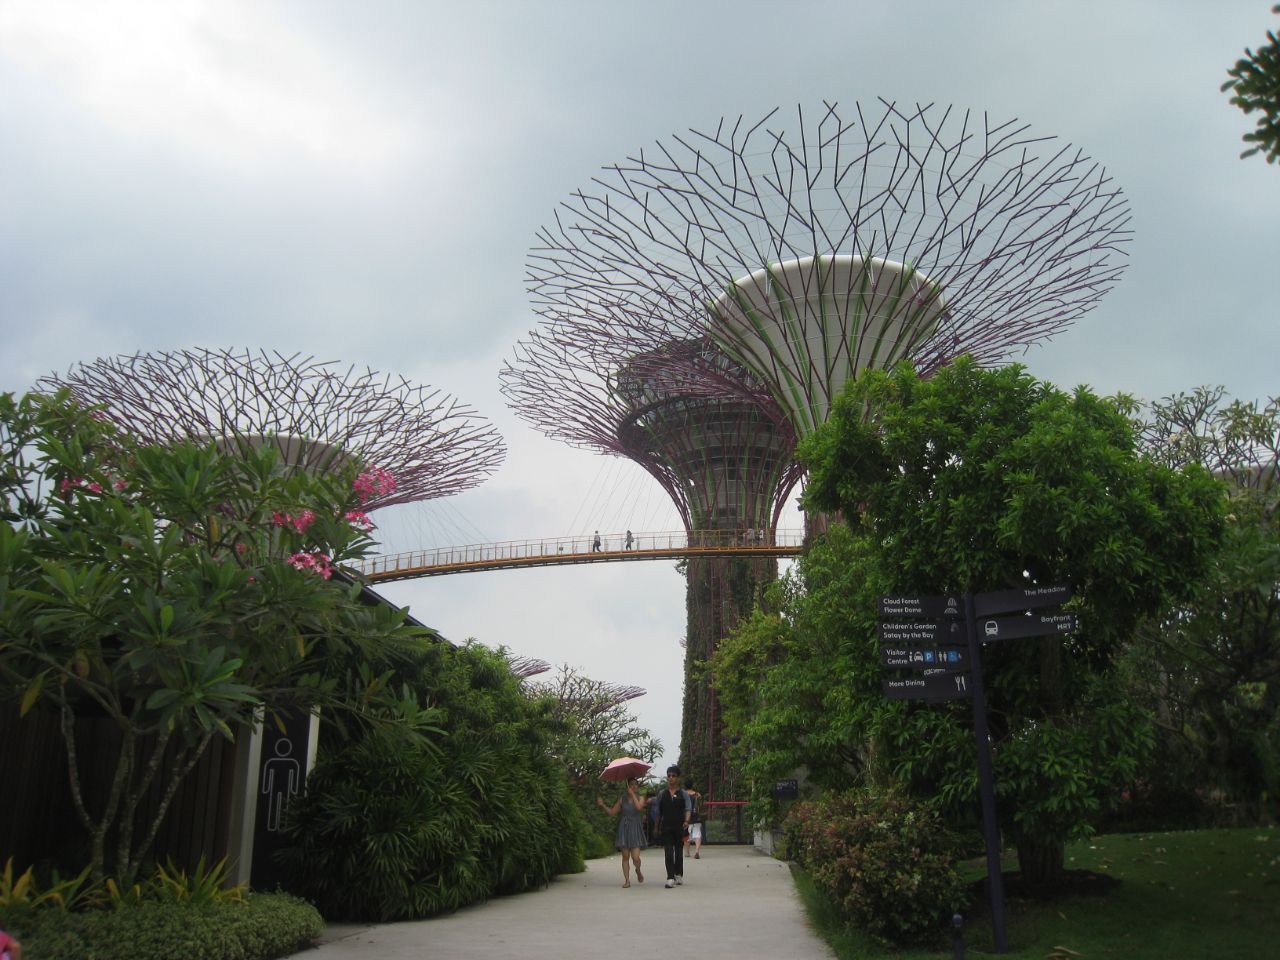 Сады у Залива Сингапур (столица), Сингапур (город-государство)